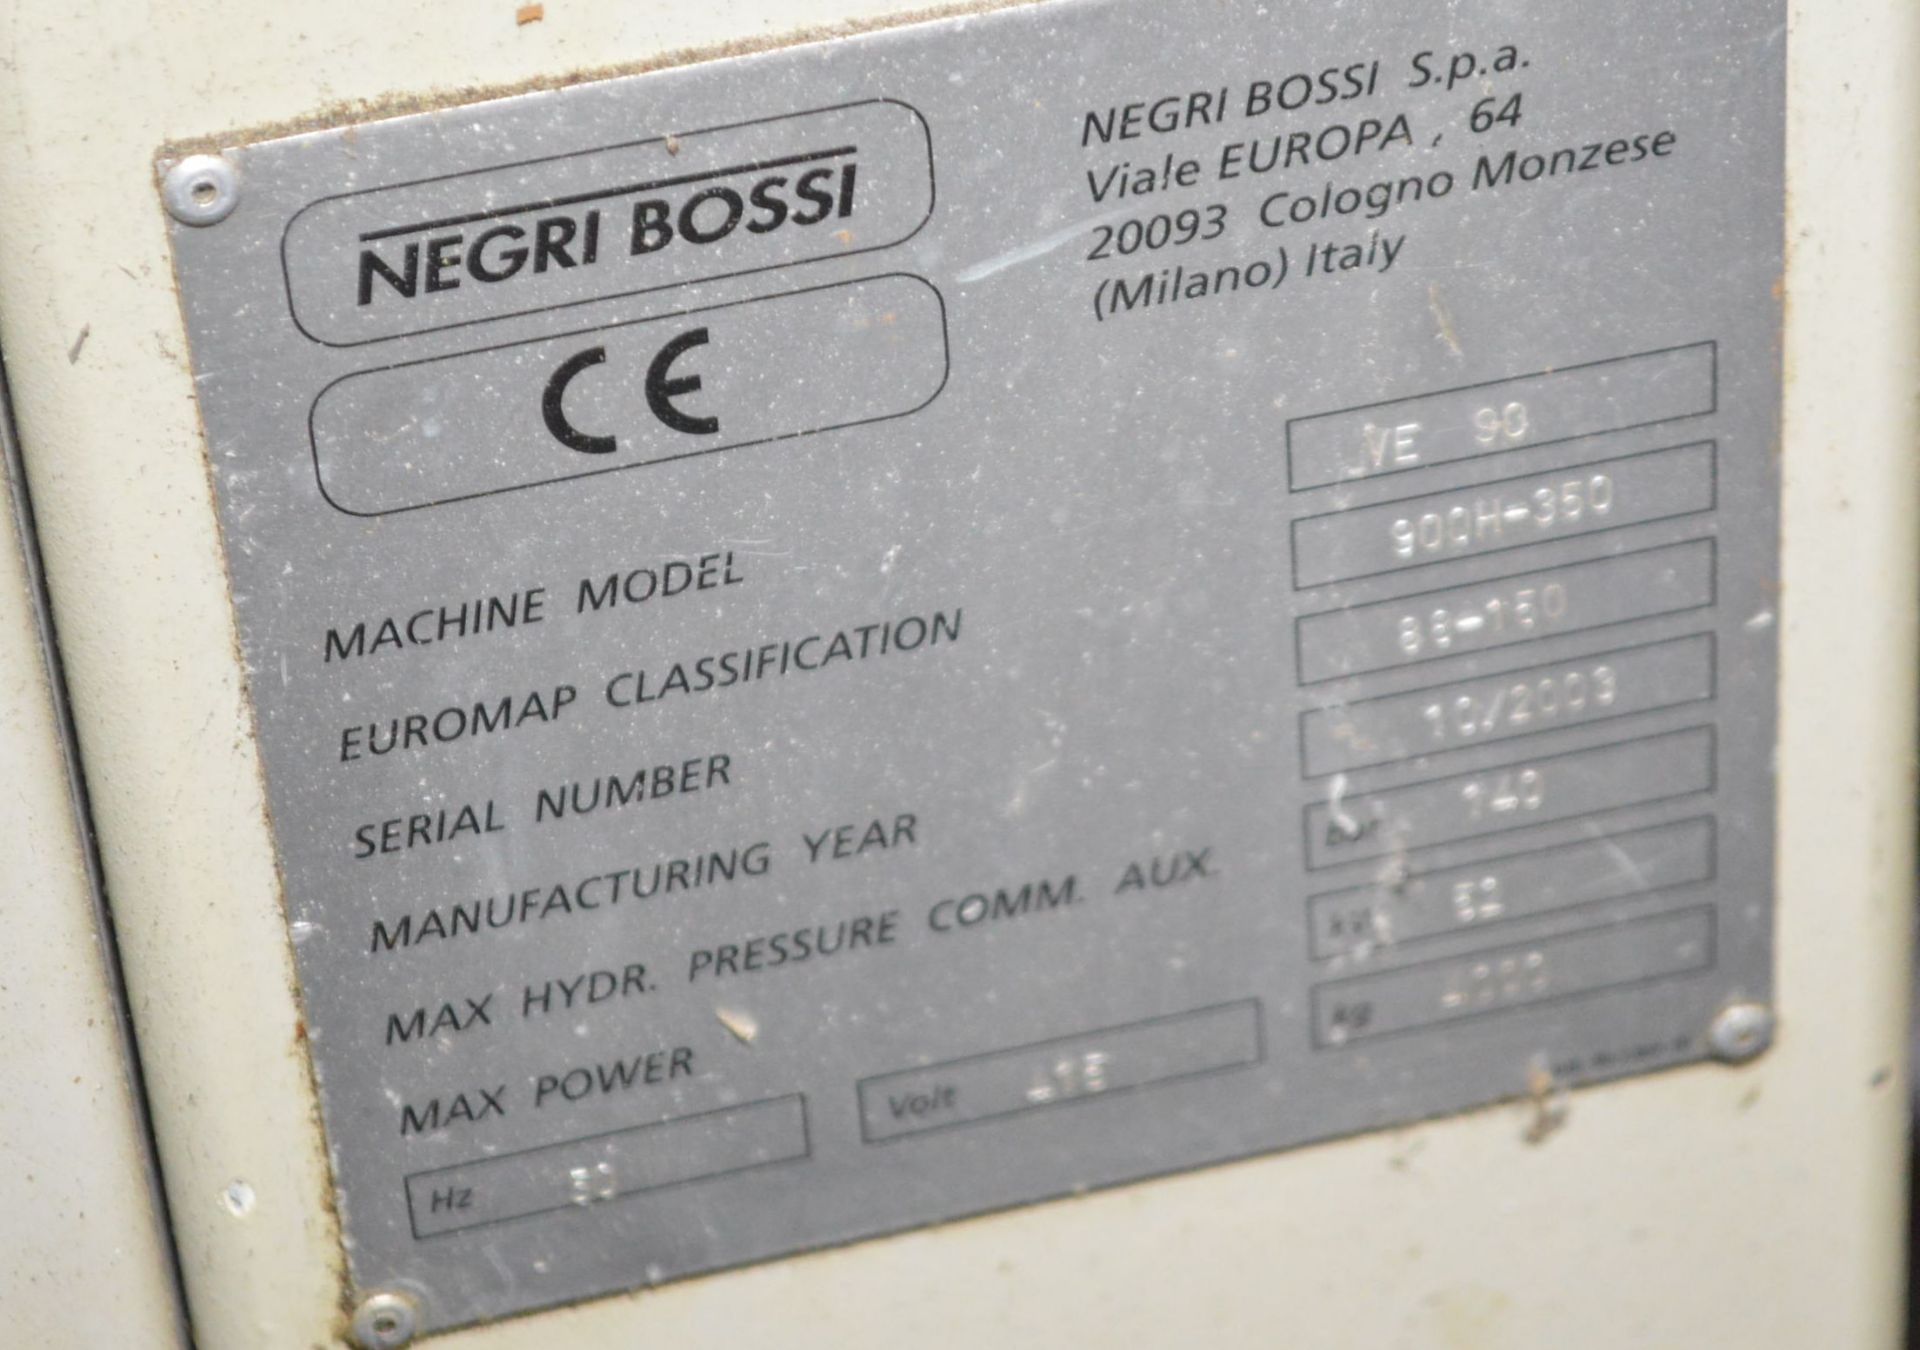 Negri Bossi VE90-350 90 tonne PLASTIC INJECTION MOULDING MACHINE, serial no. 88-150, euromap - Bild 4 aus 4